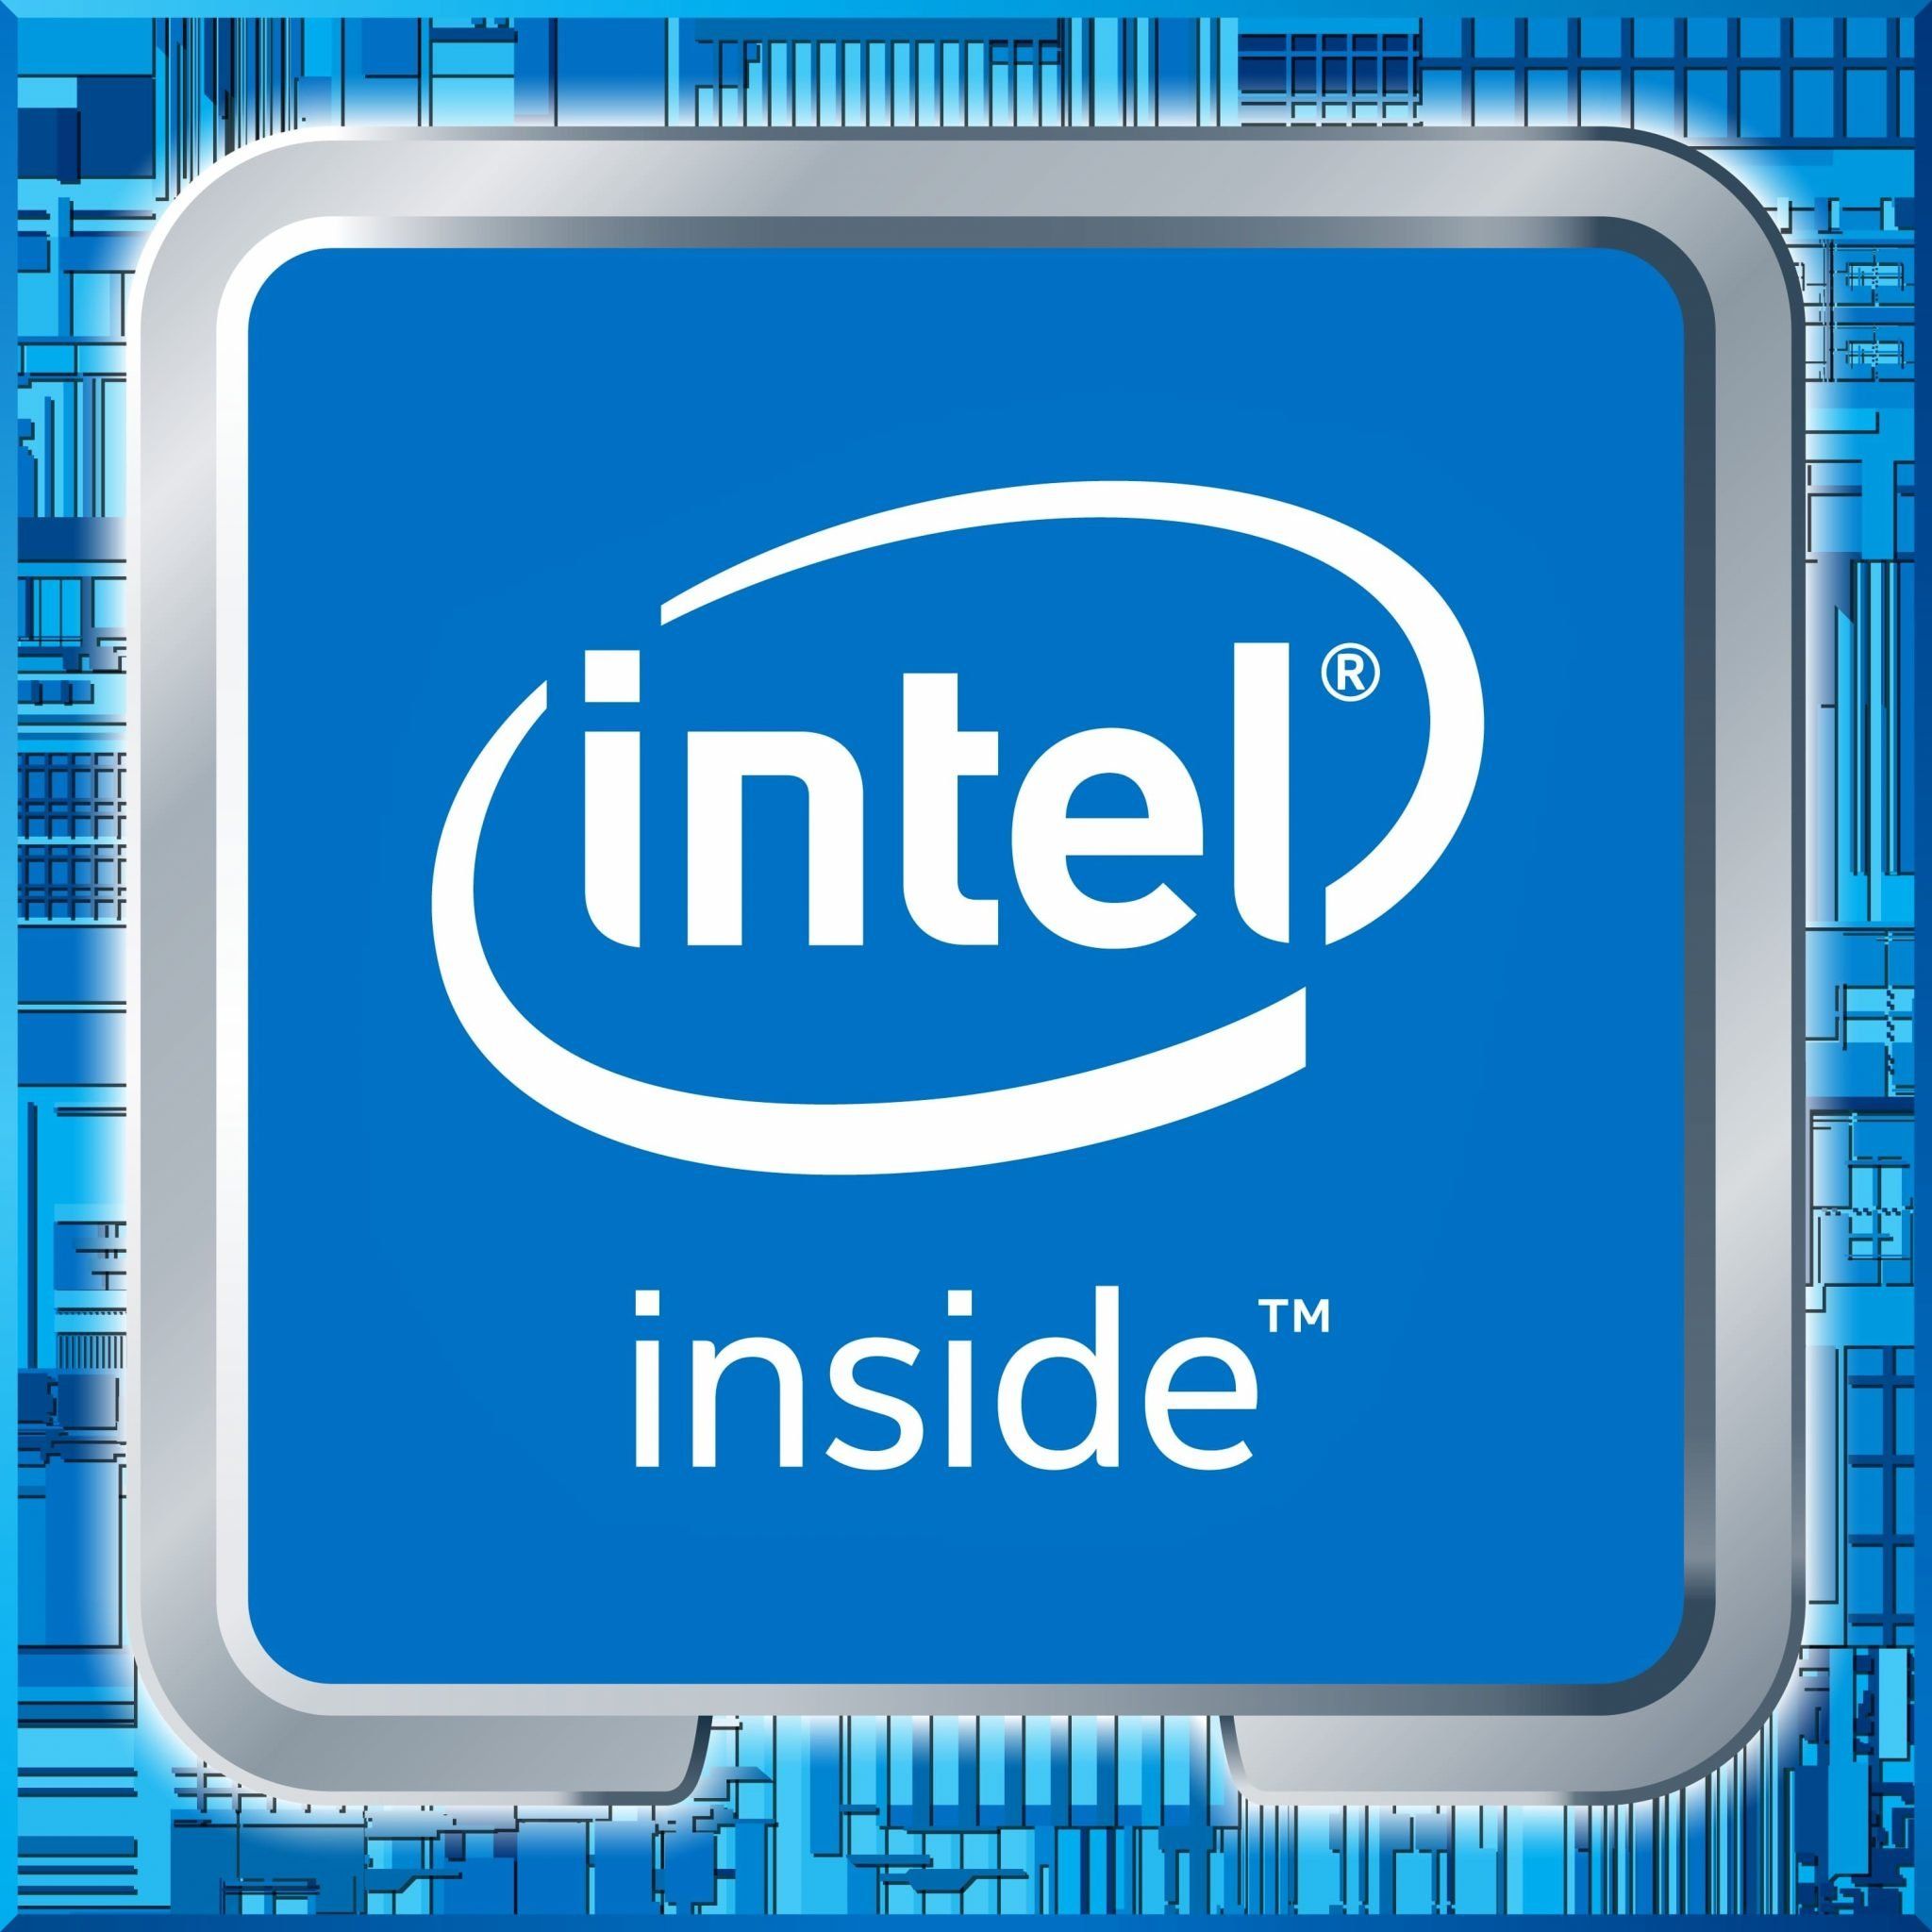 Intel events. Intel inside Core i7 logo. Интел пентиум инсайд. Intel Celeron inside logo. Процессор Intel inside.